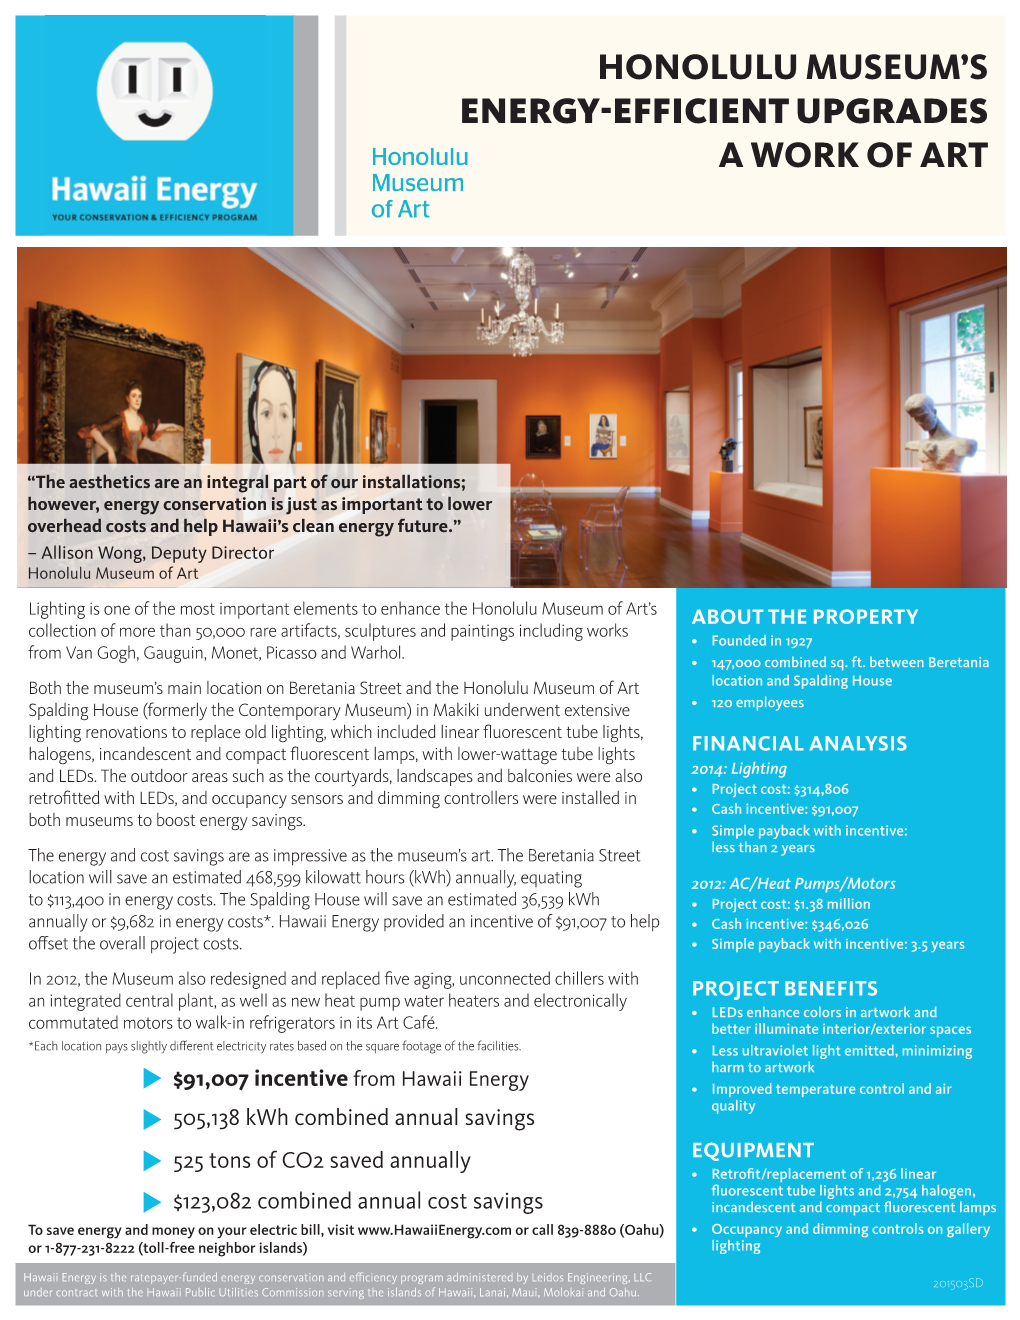 Honolulu Museum's Energy-Efficient Upgrades